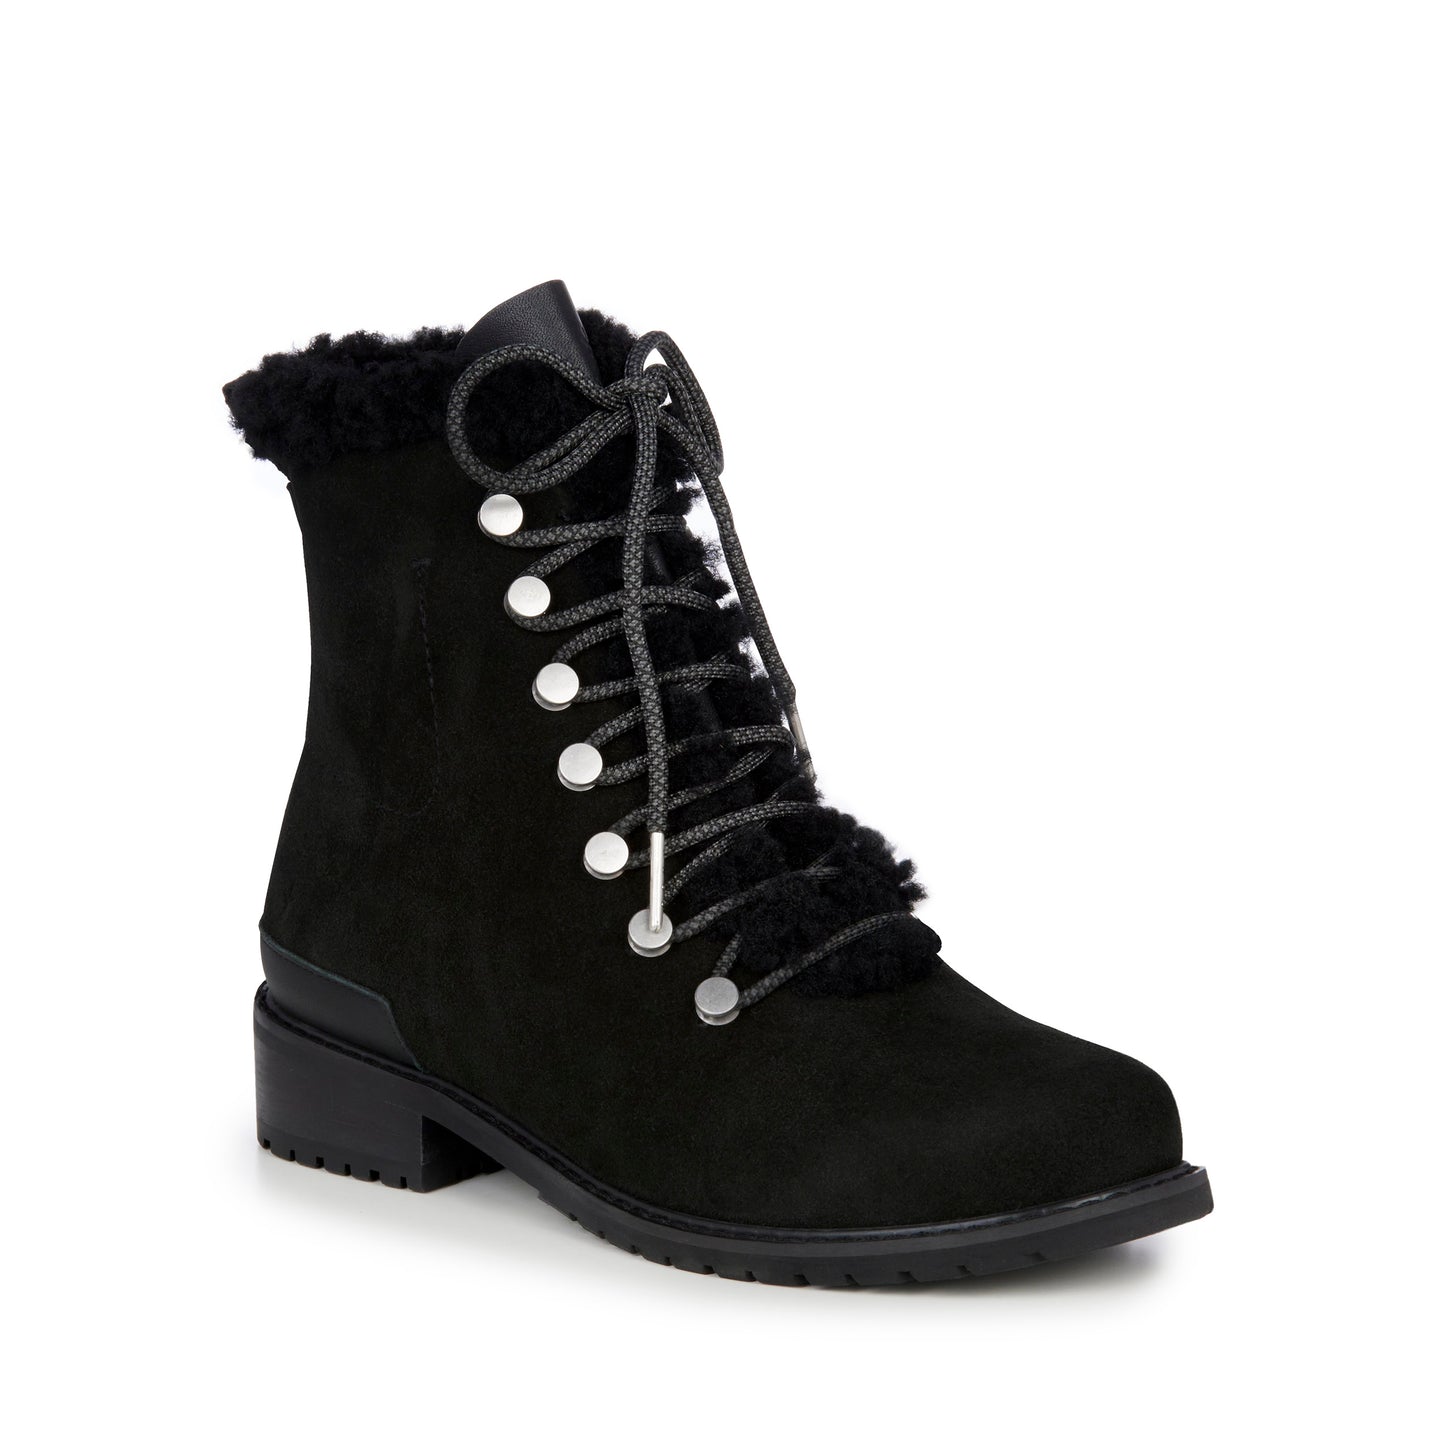 Billington Waterproof Leather Merino Lined Lace Up Boot in Black